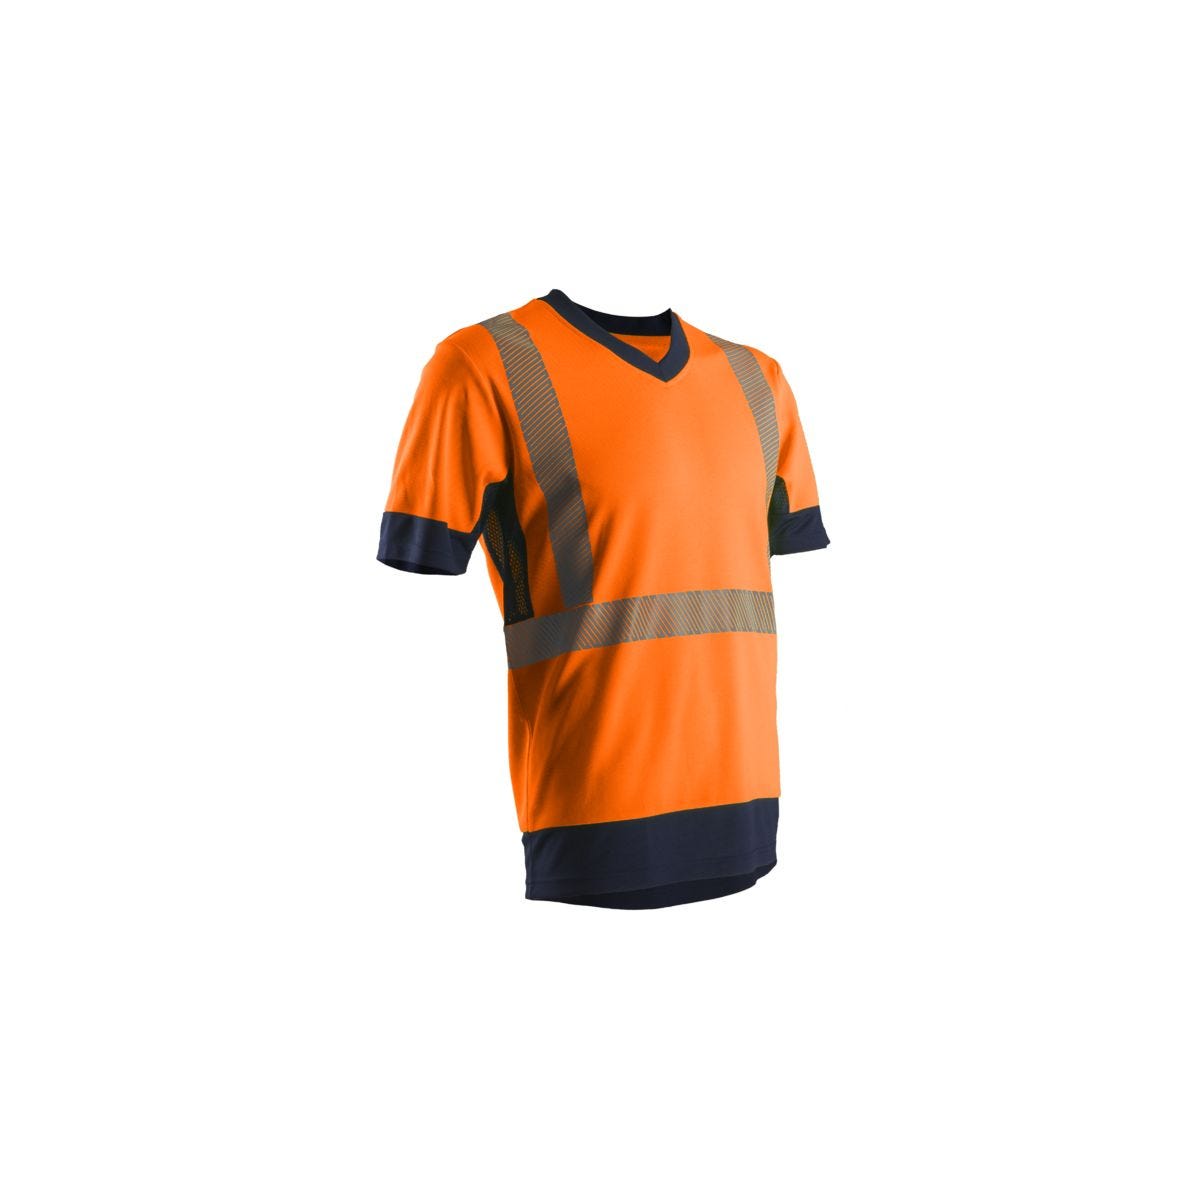 KOMO T-shirt MC, orange HV/marine, 55%CO/45%PES, 150g/m² - COVERGUARD - Taille 2XL 0